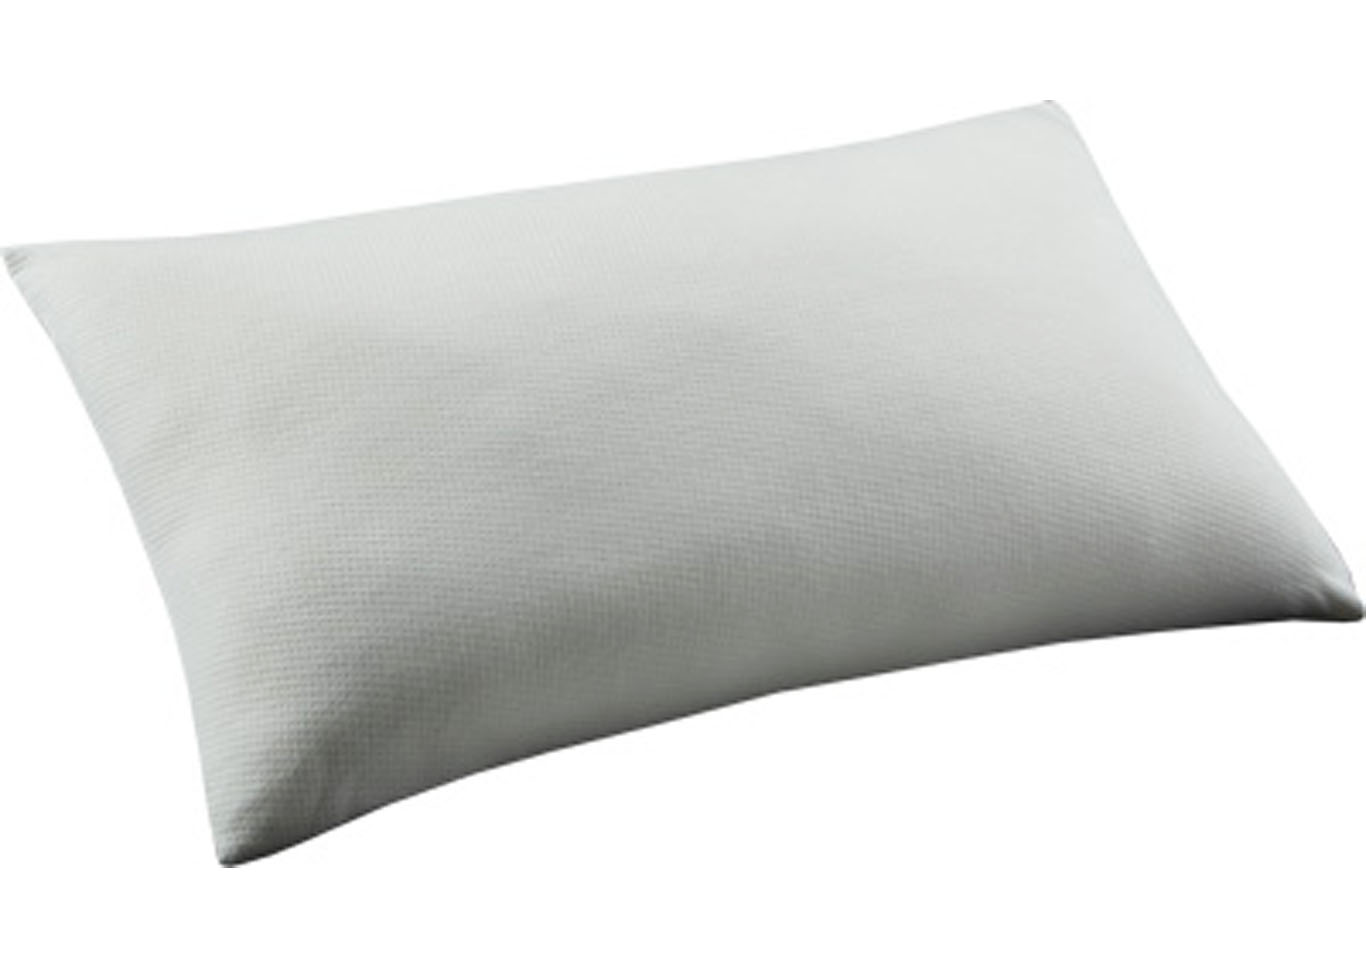 Comfort Rest Pillow,Instore